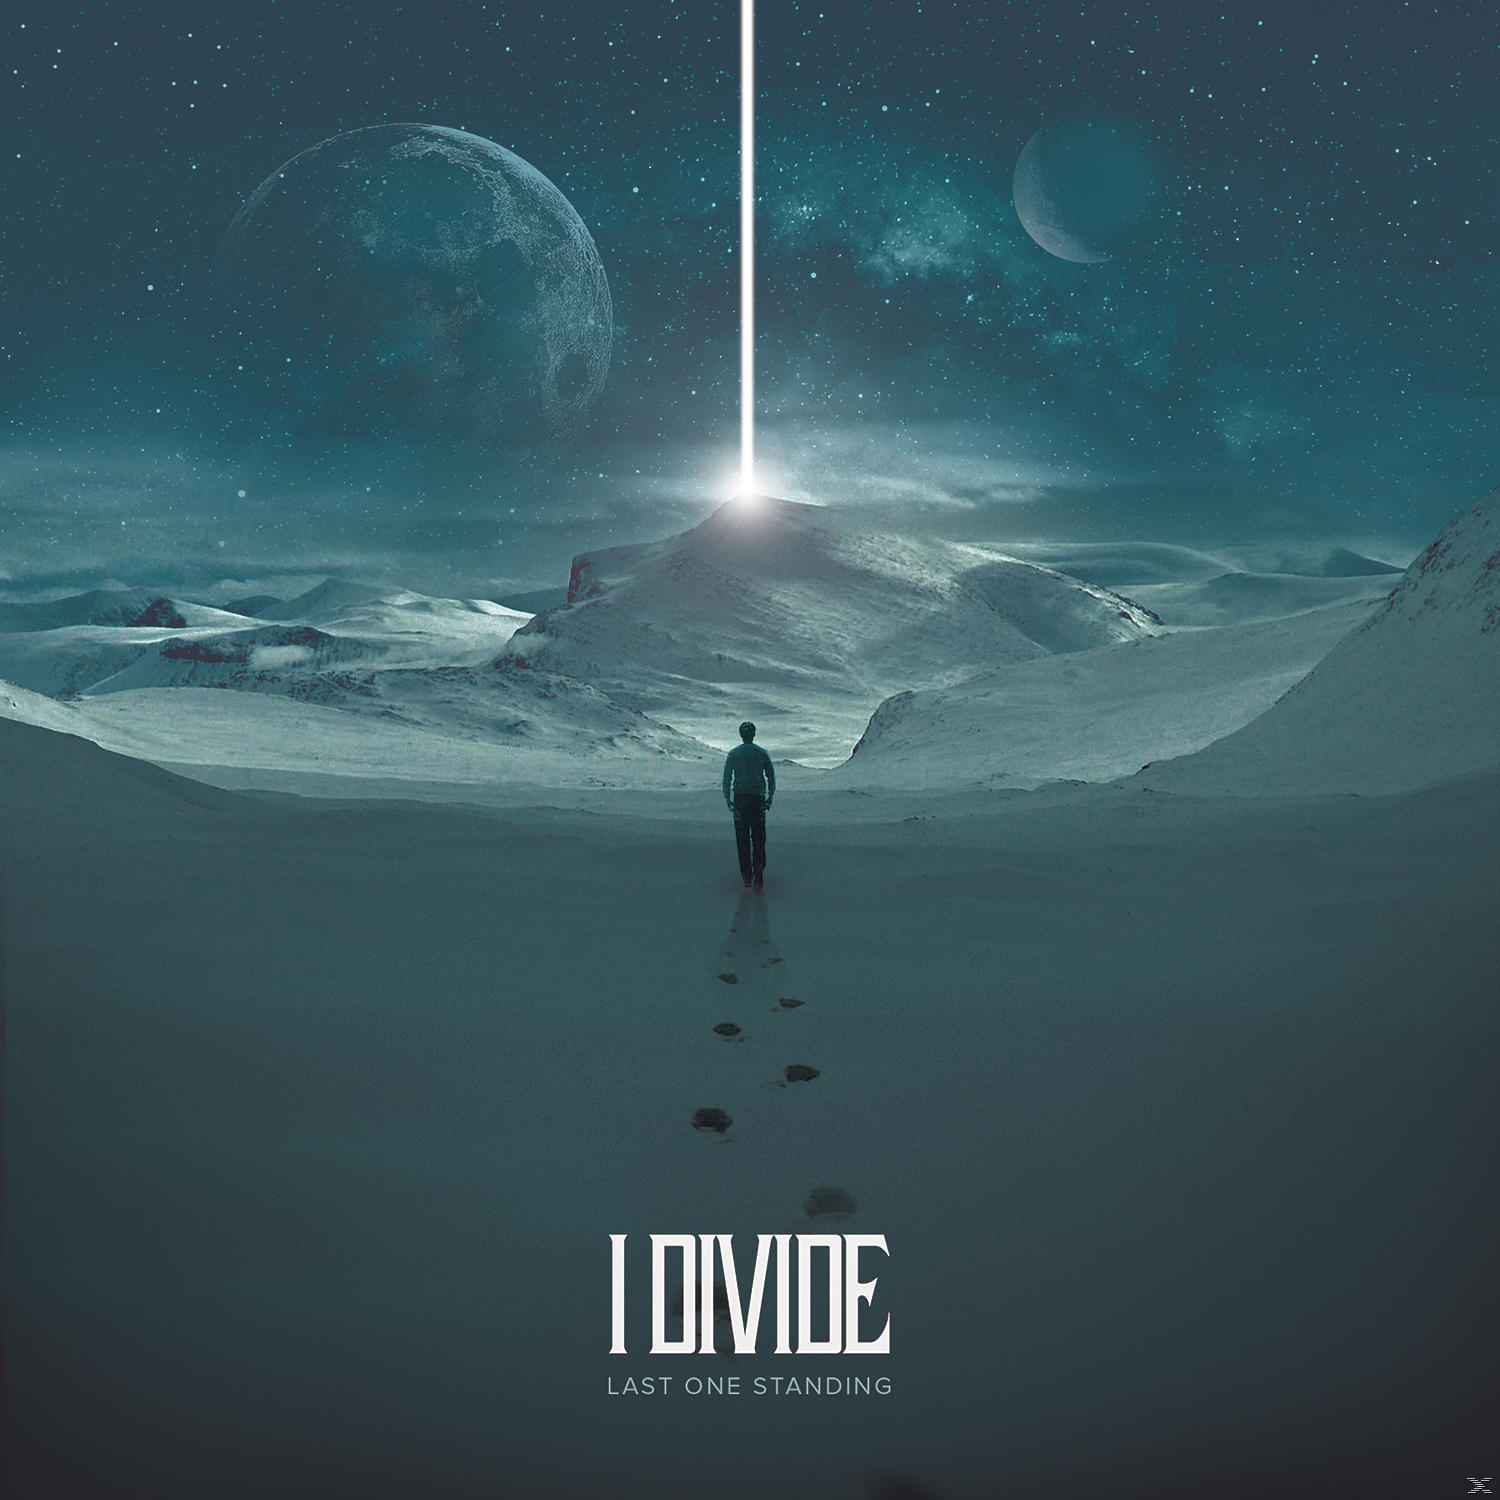 I Divide - - Standing One (CD) Last